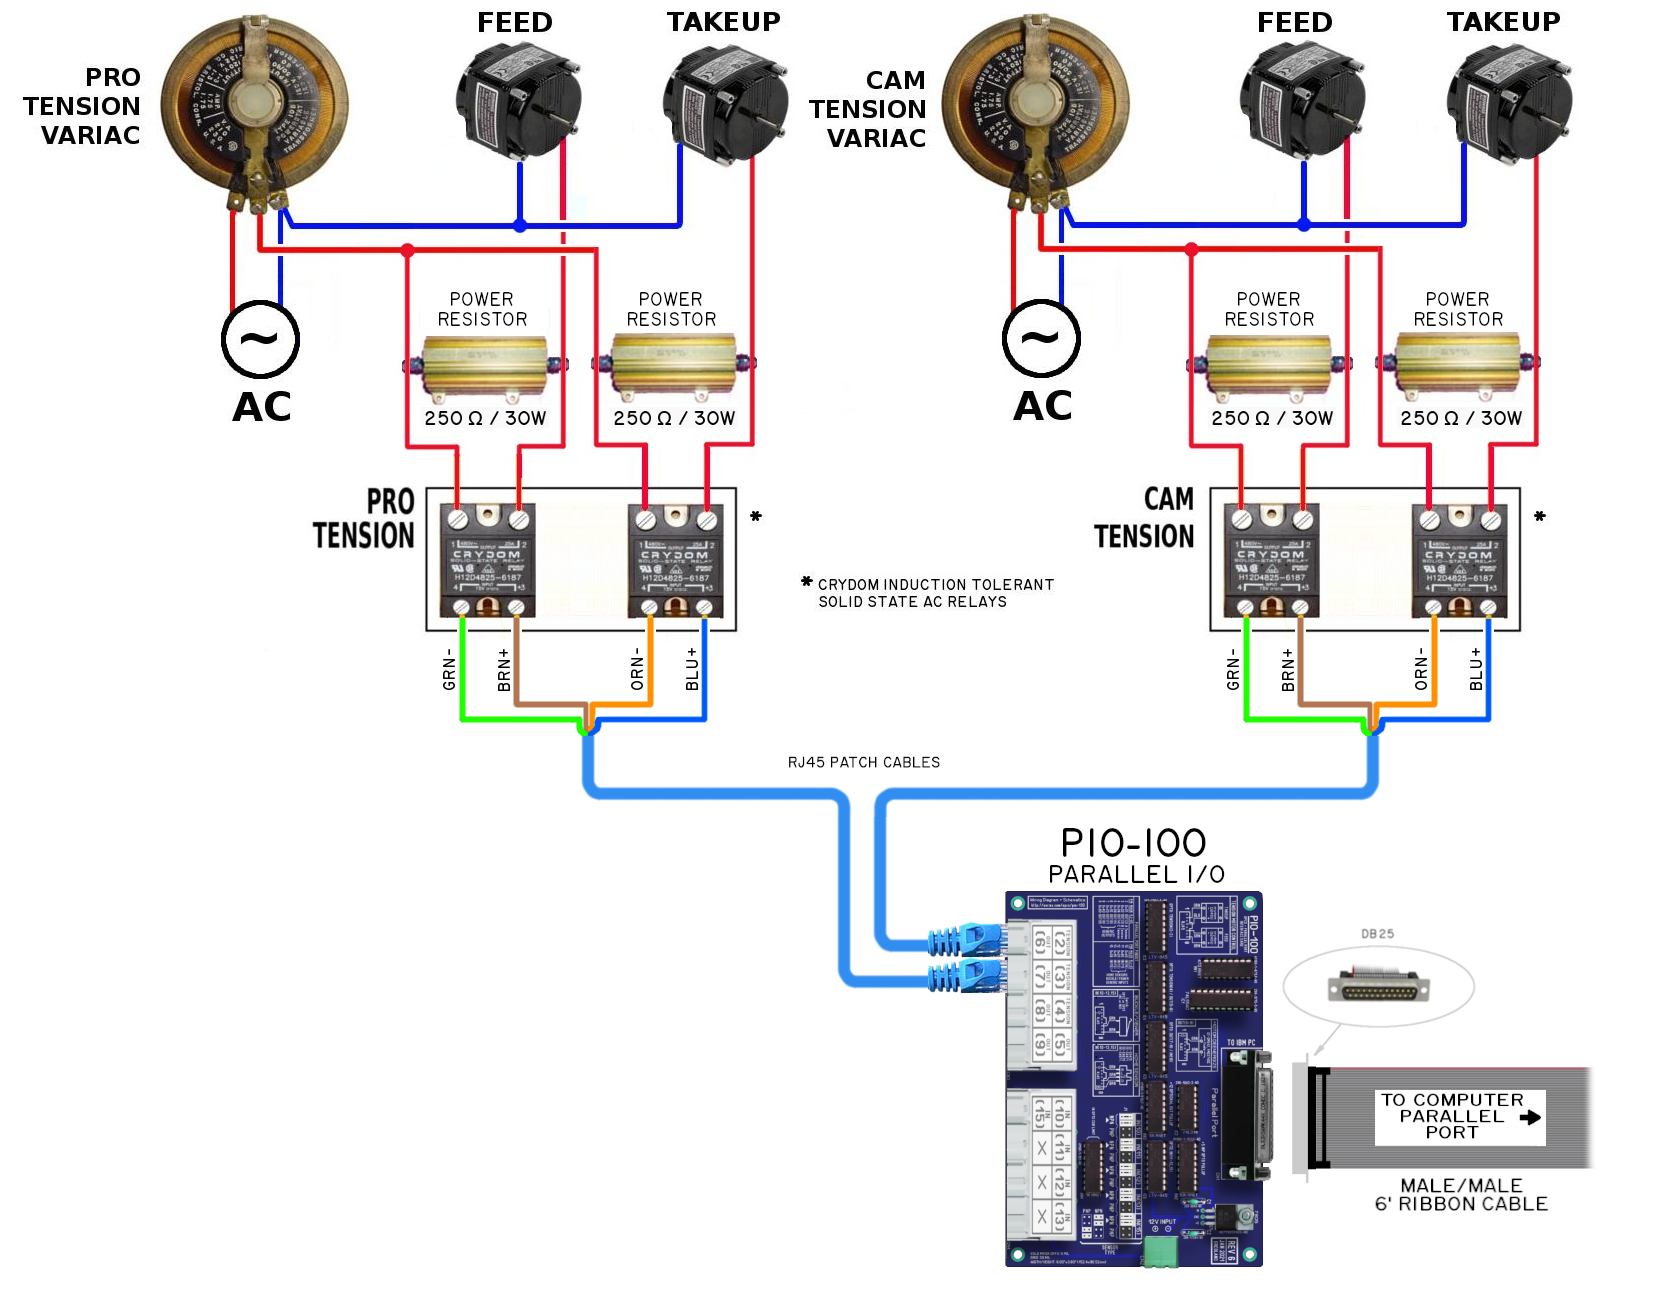 opcs-feed-takeup-wiring-to-pio-100.png